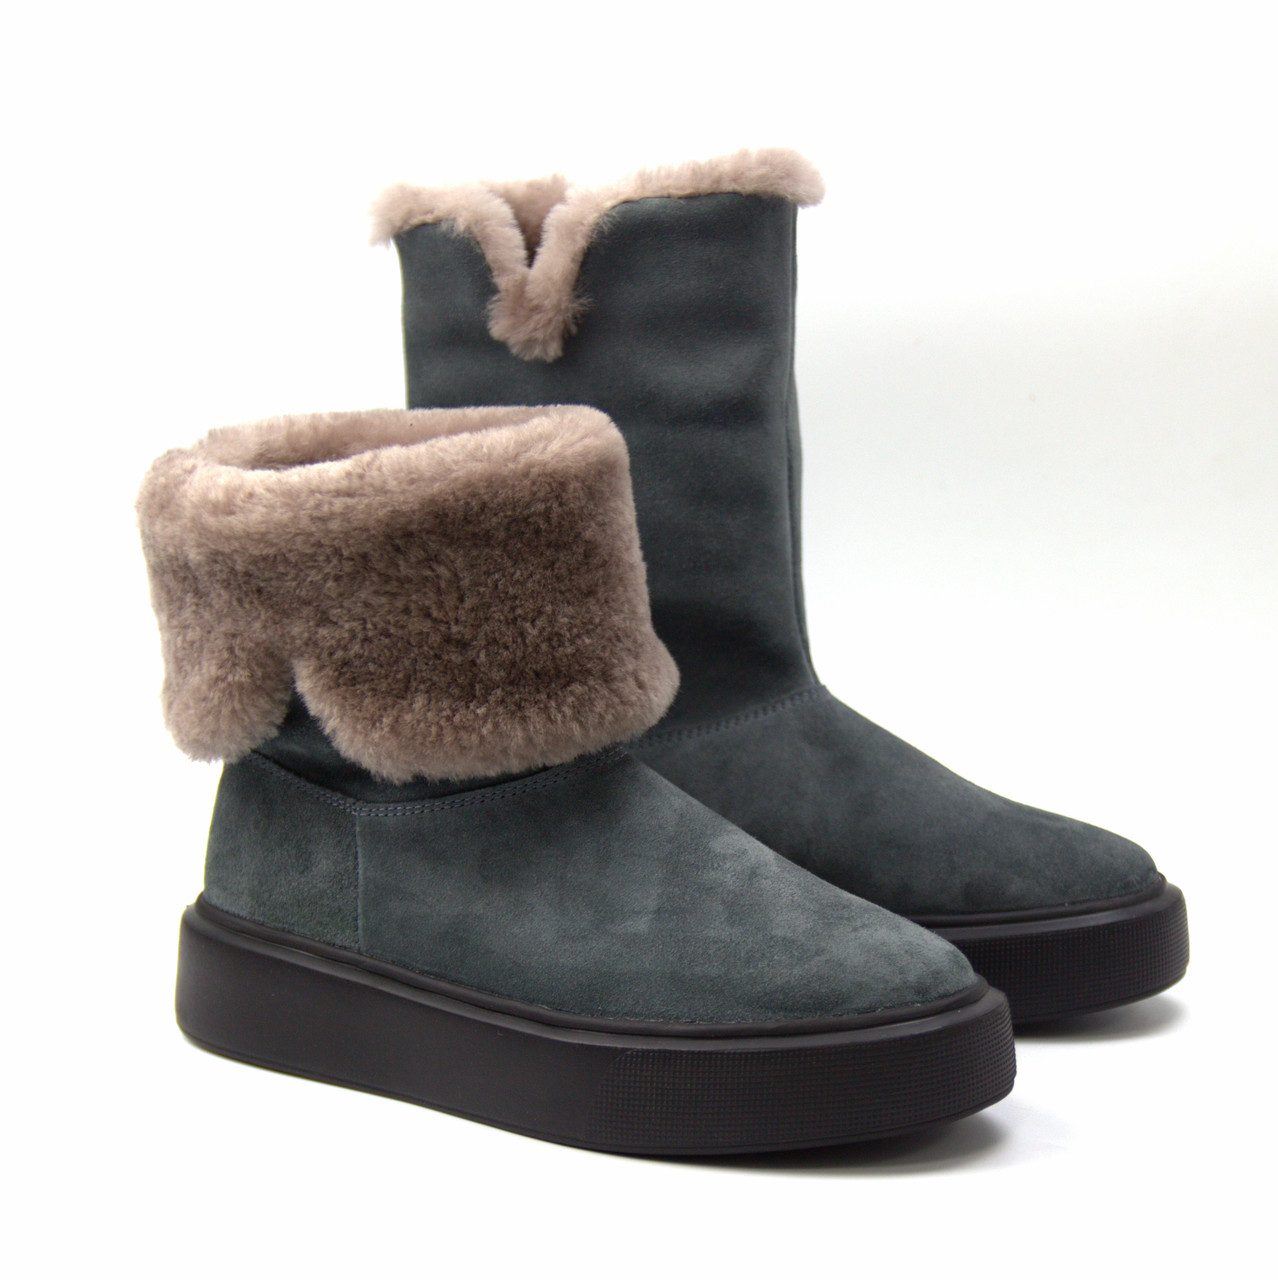 Уггі жіночі замшеві сіре тепле взуття черевики натуральний хутро COSMO Shoes From Field Grey Vel